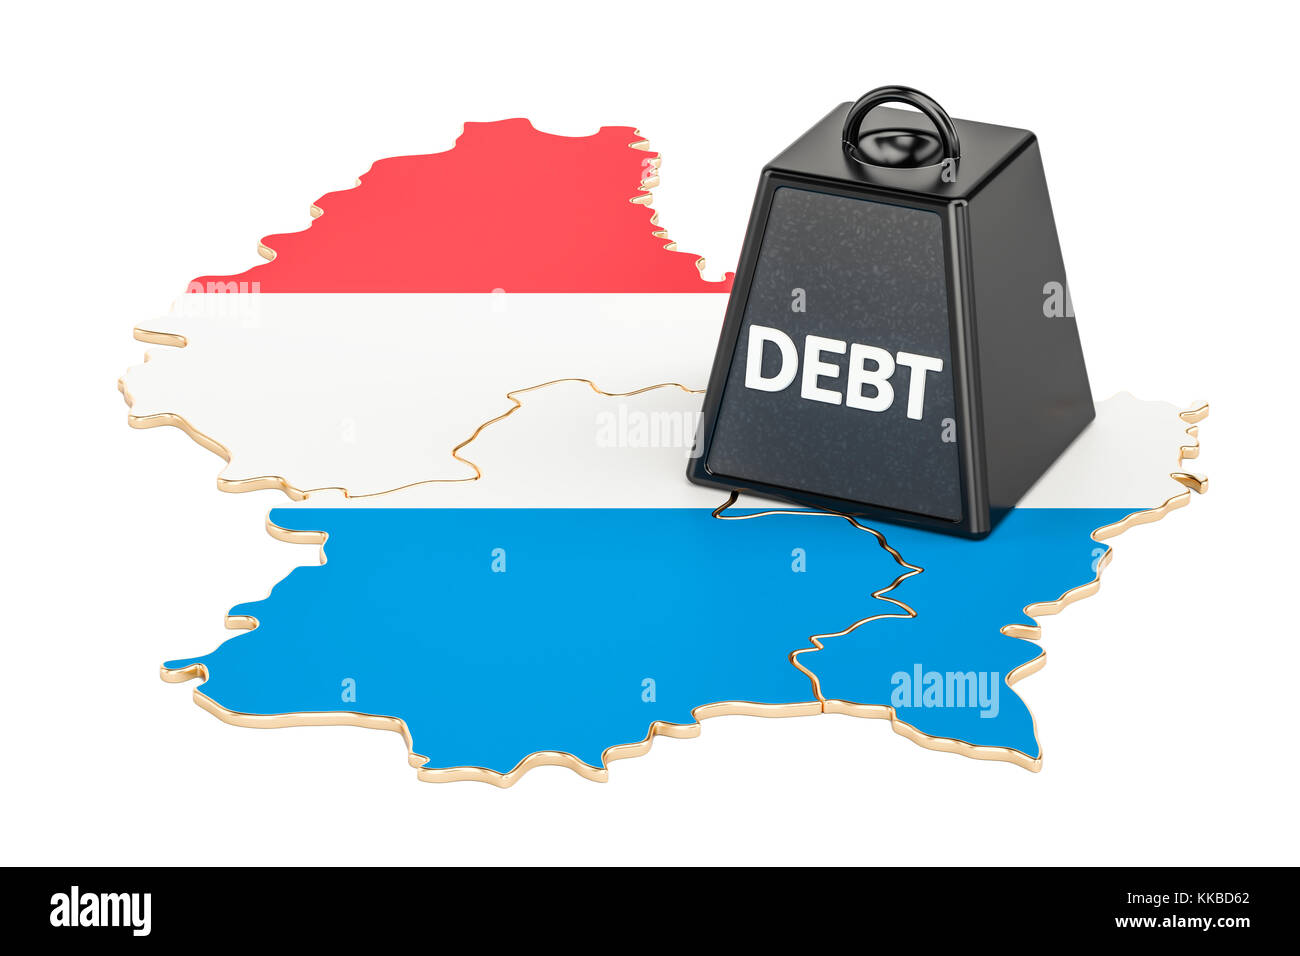 Luxemburg Staatsverschuldung oder Haushaltsdefizit, Finanzkrise Konzept, 3D-Rendering Stockfoto